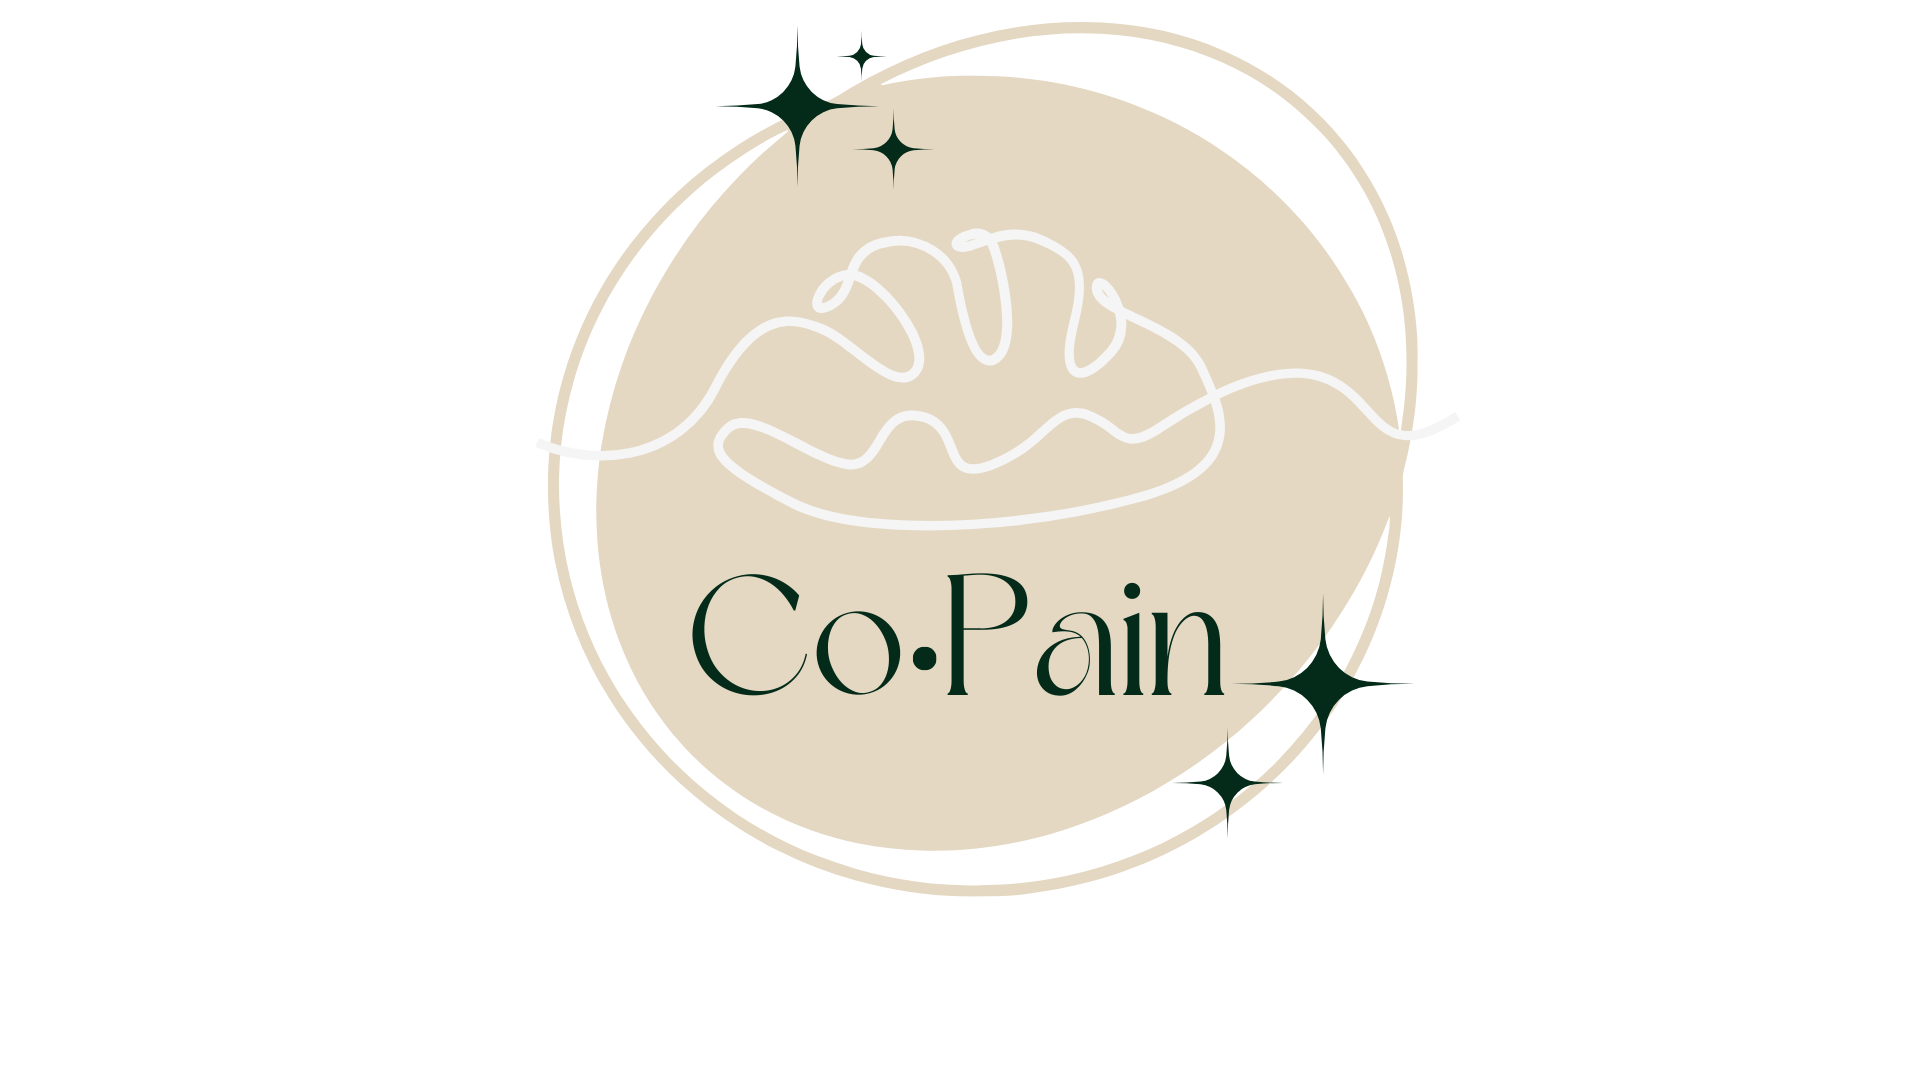 Copain logo circle